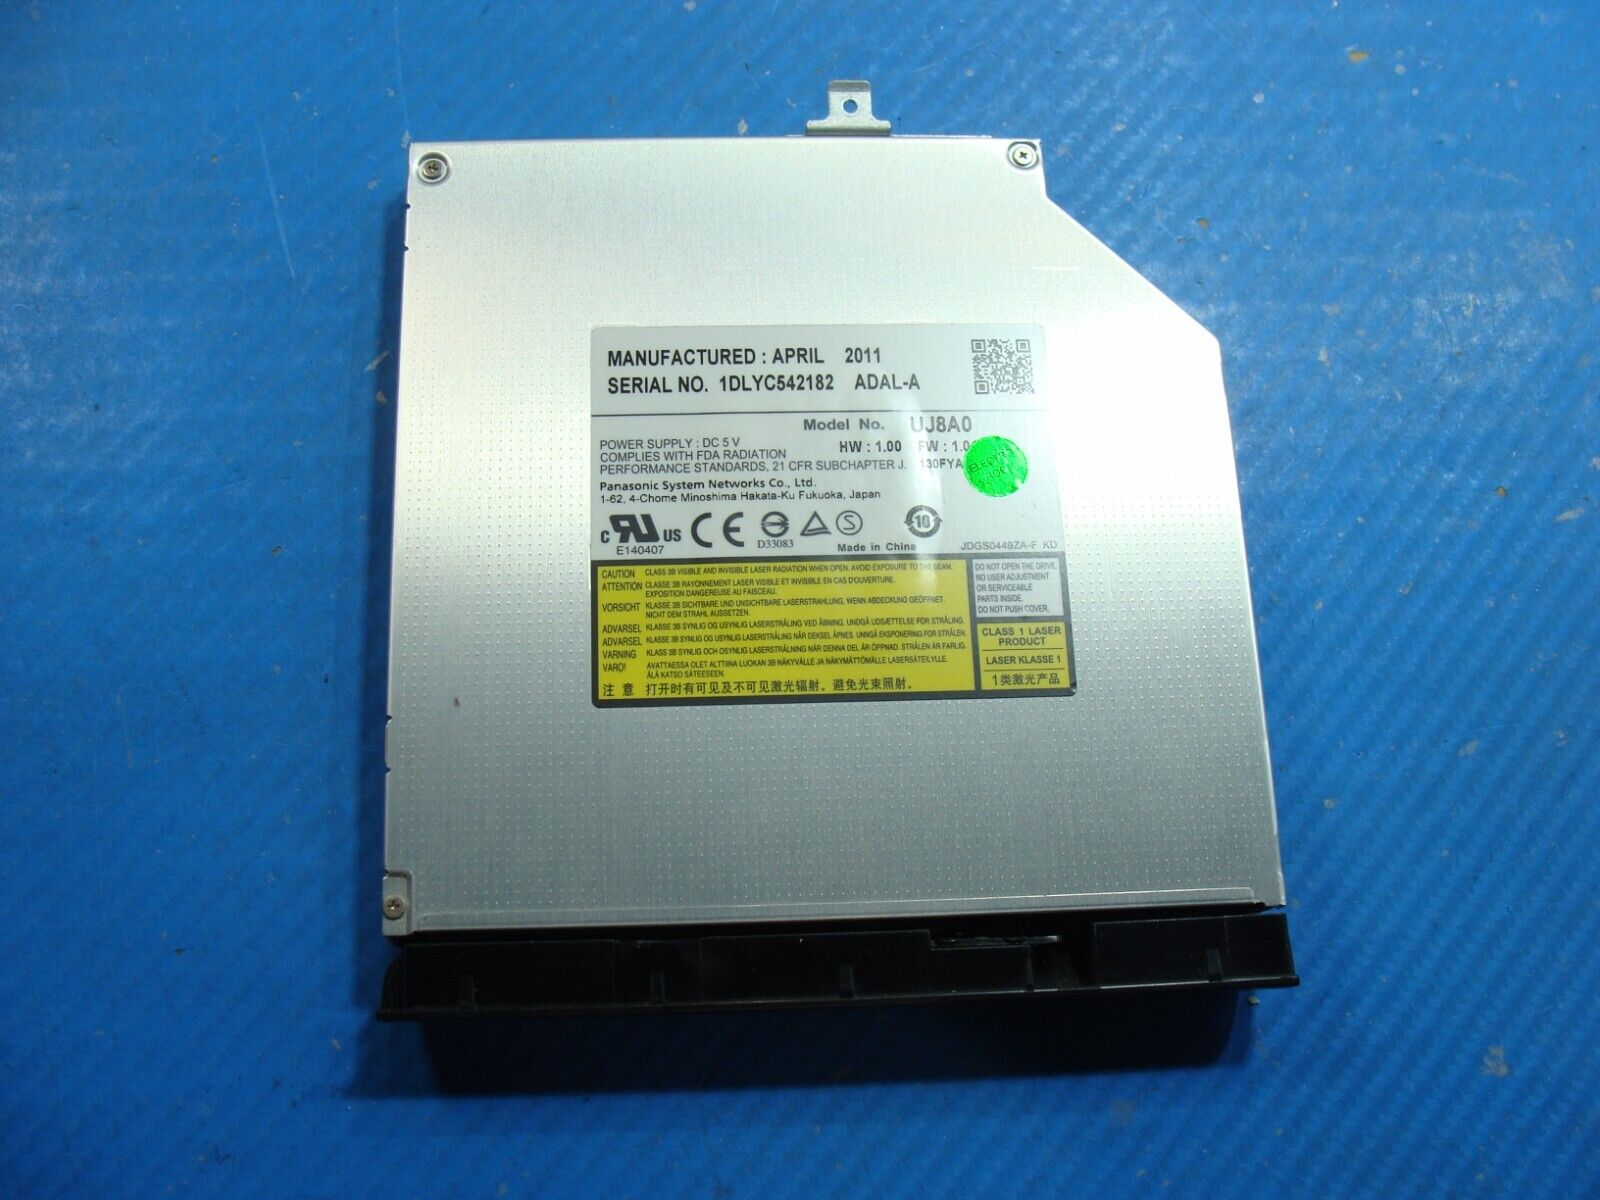 Asus 14” A43S Genuine Laptop DVD+RW Optical Drive 1DLYC542182 ADAL-A UJ8A0